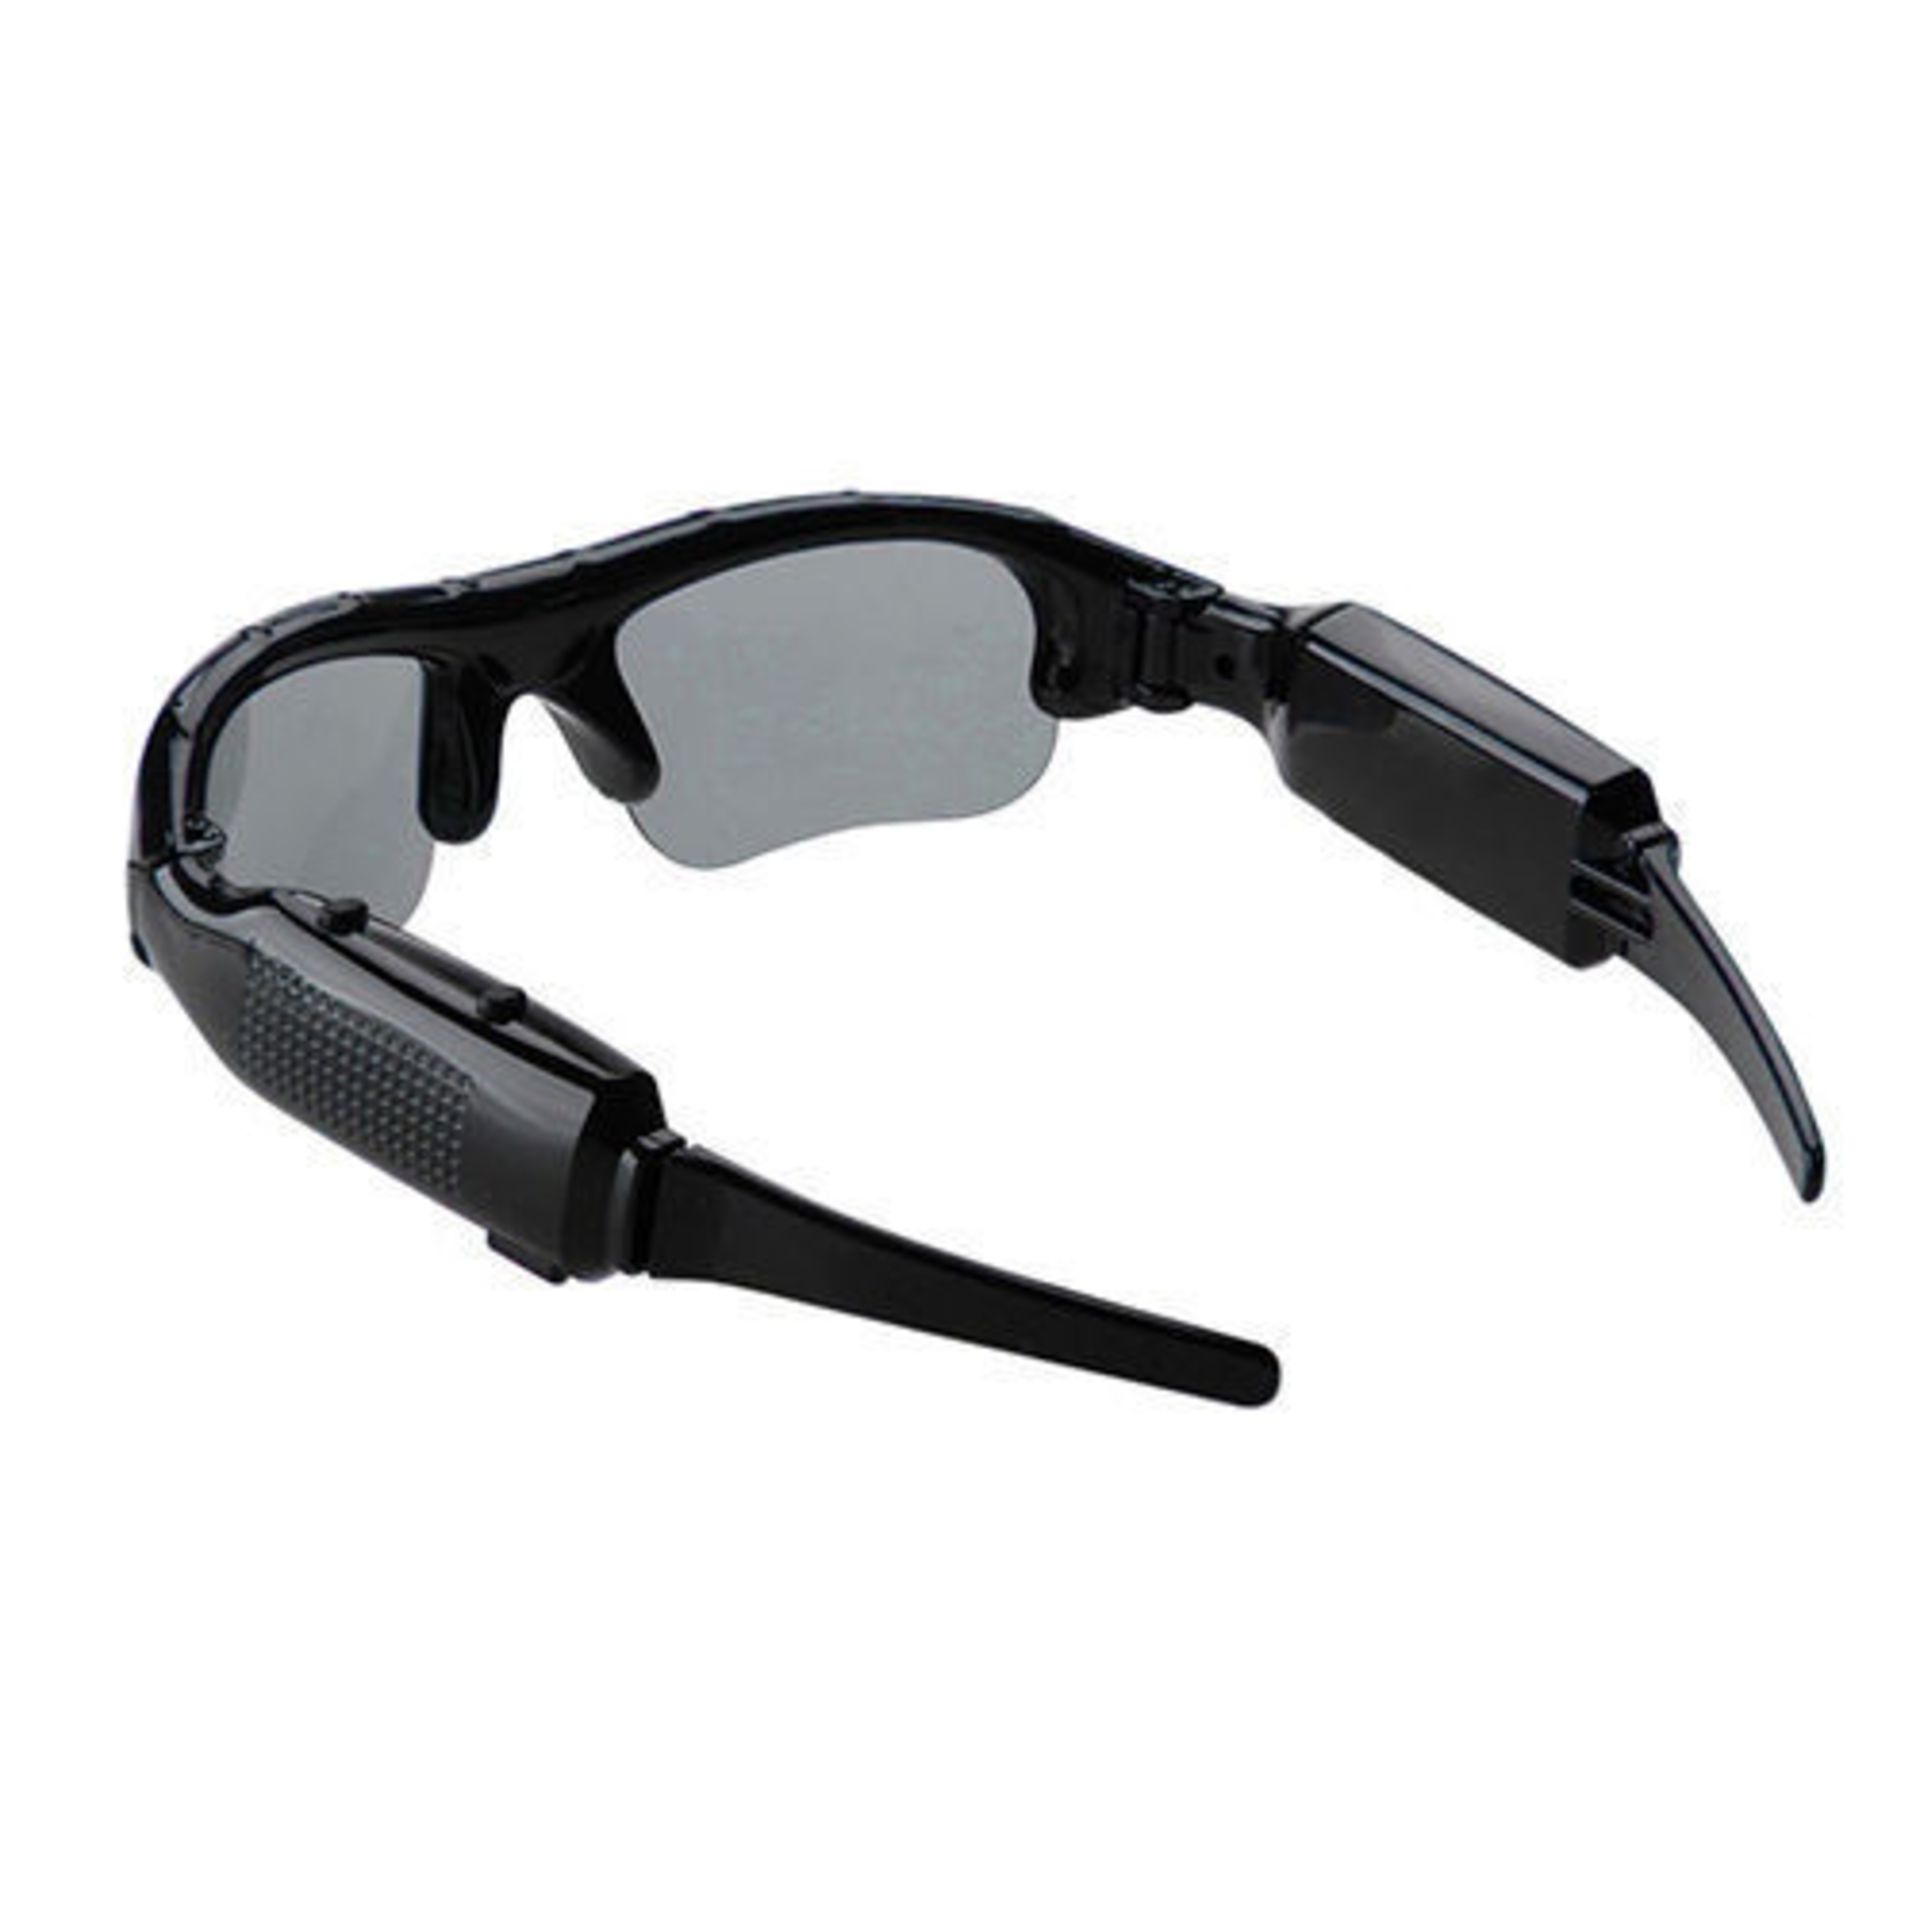 + VAT Brand New Adventure Pro HD Video & Sound Recording Sunglasses Action Cam ISP £29.99 (Ebay) - Image 2 of 3